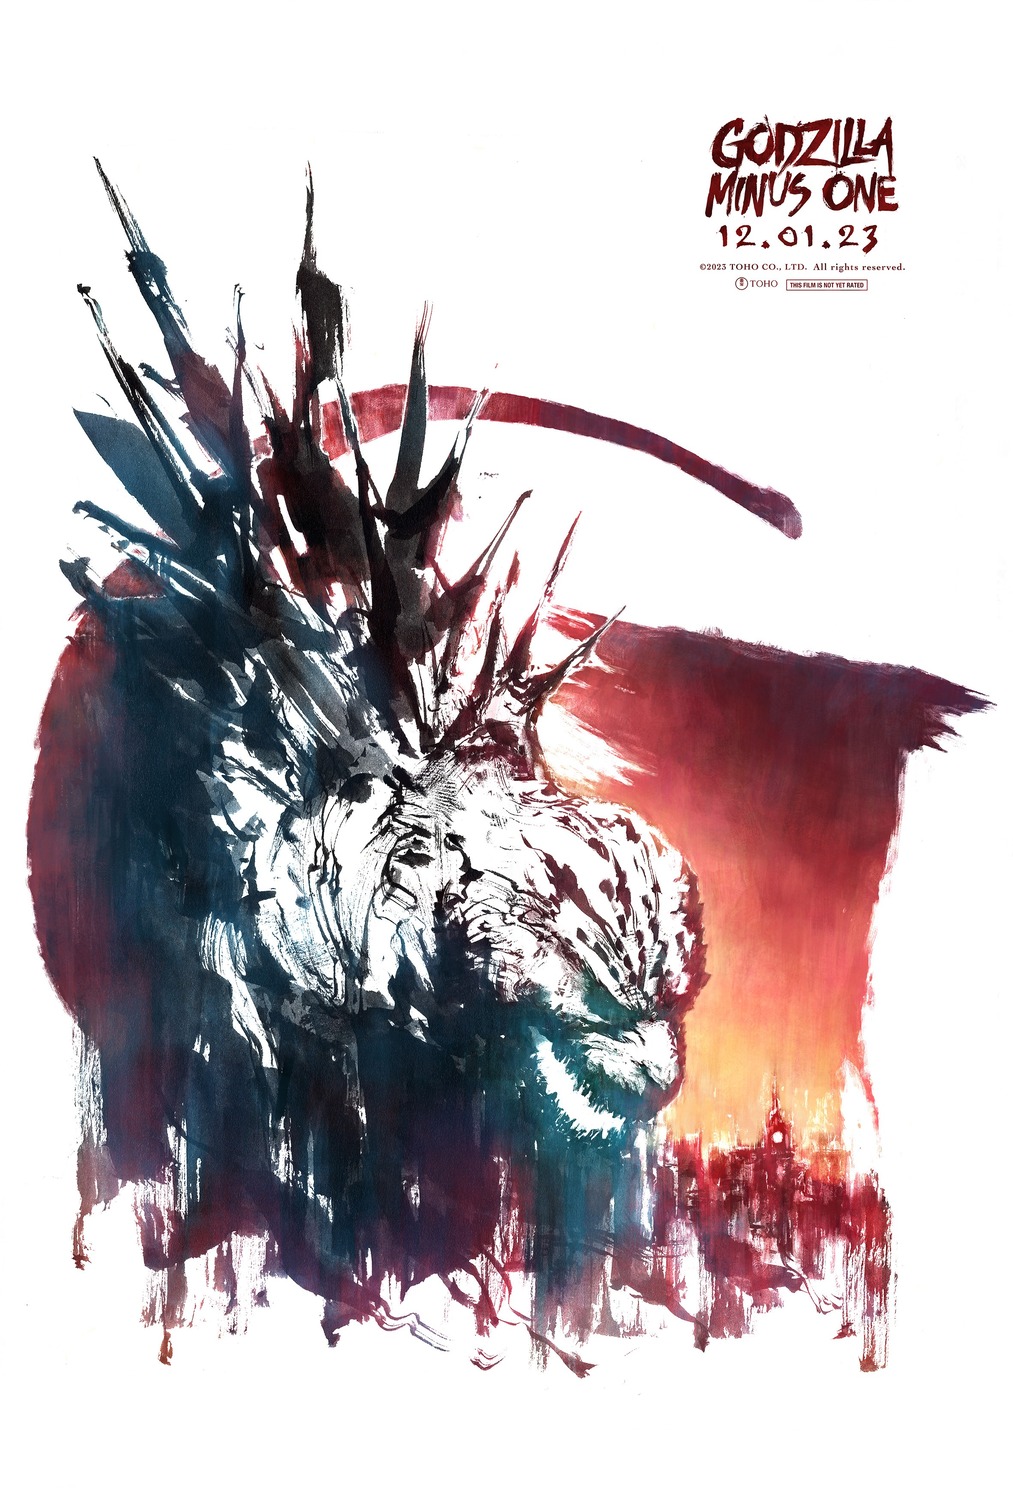 Extra Large Movie Poster Image for Godzilla: Minus One (#3 of 11)